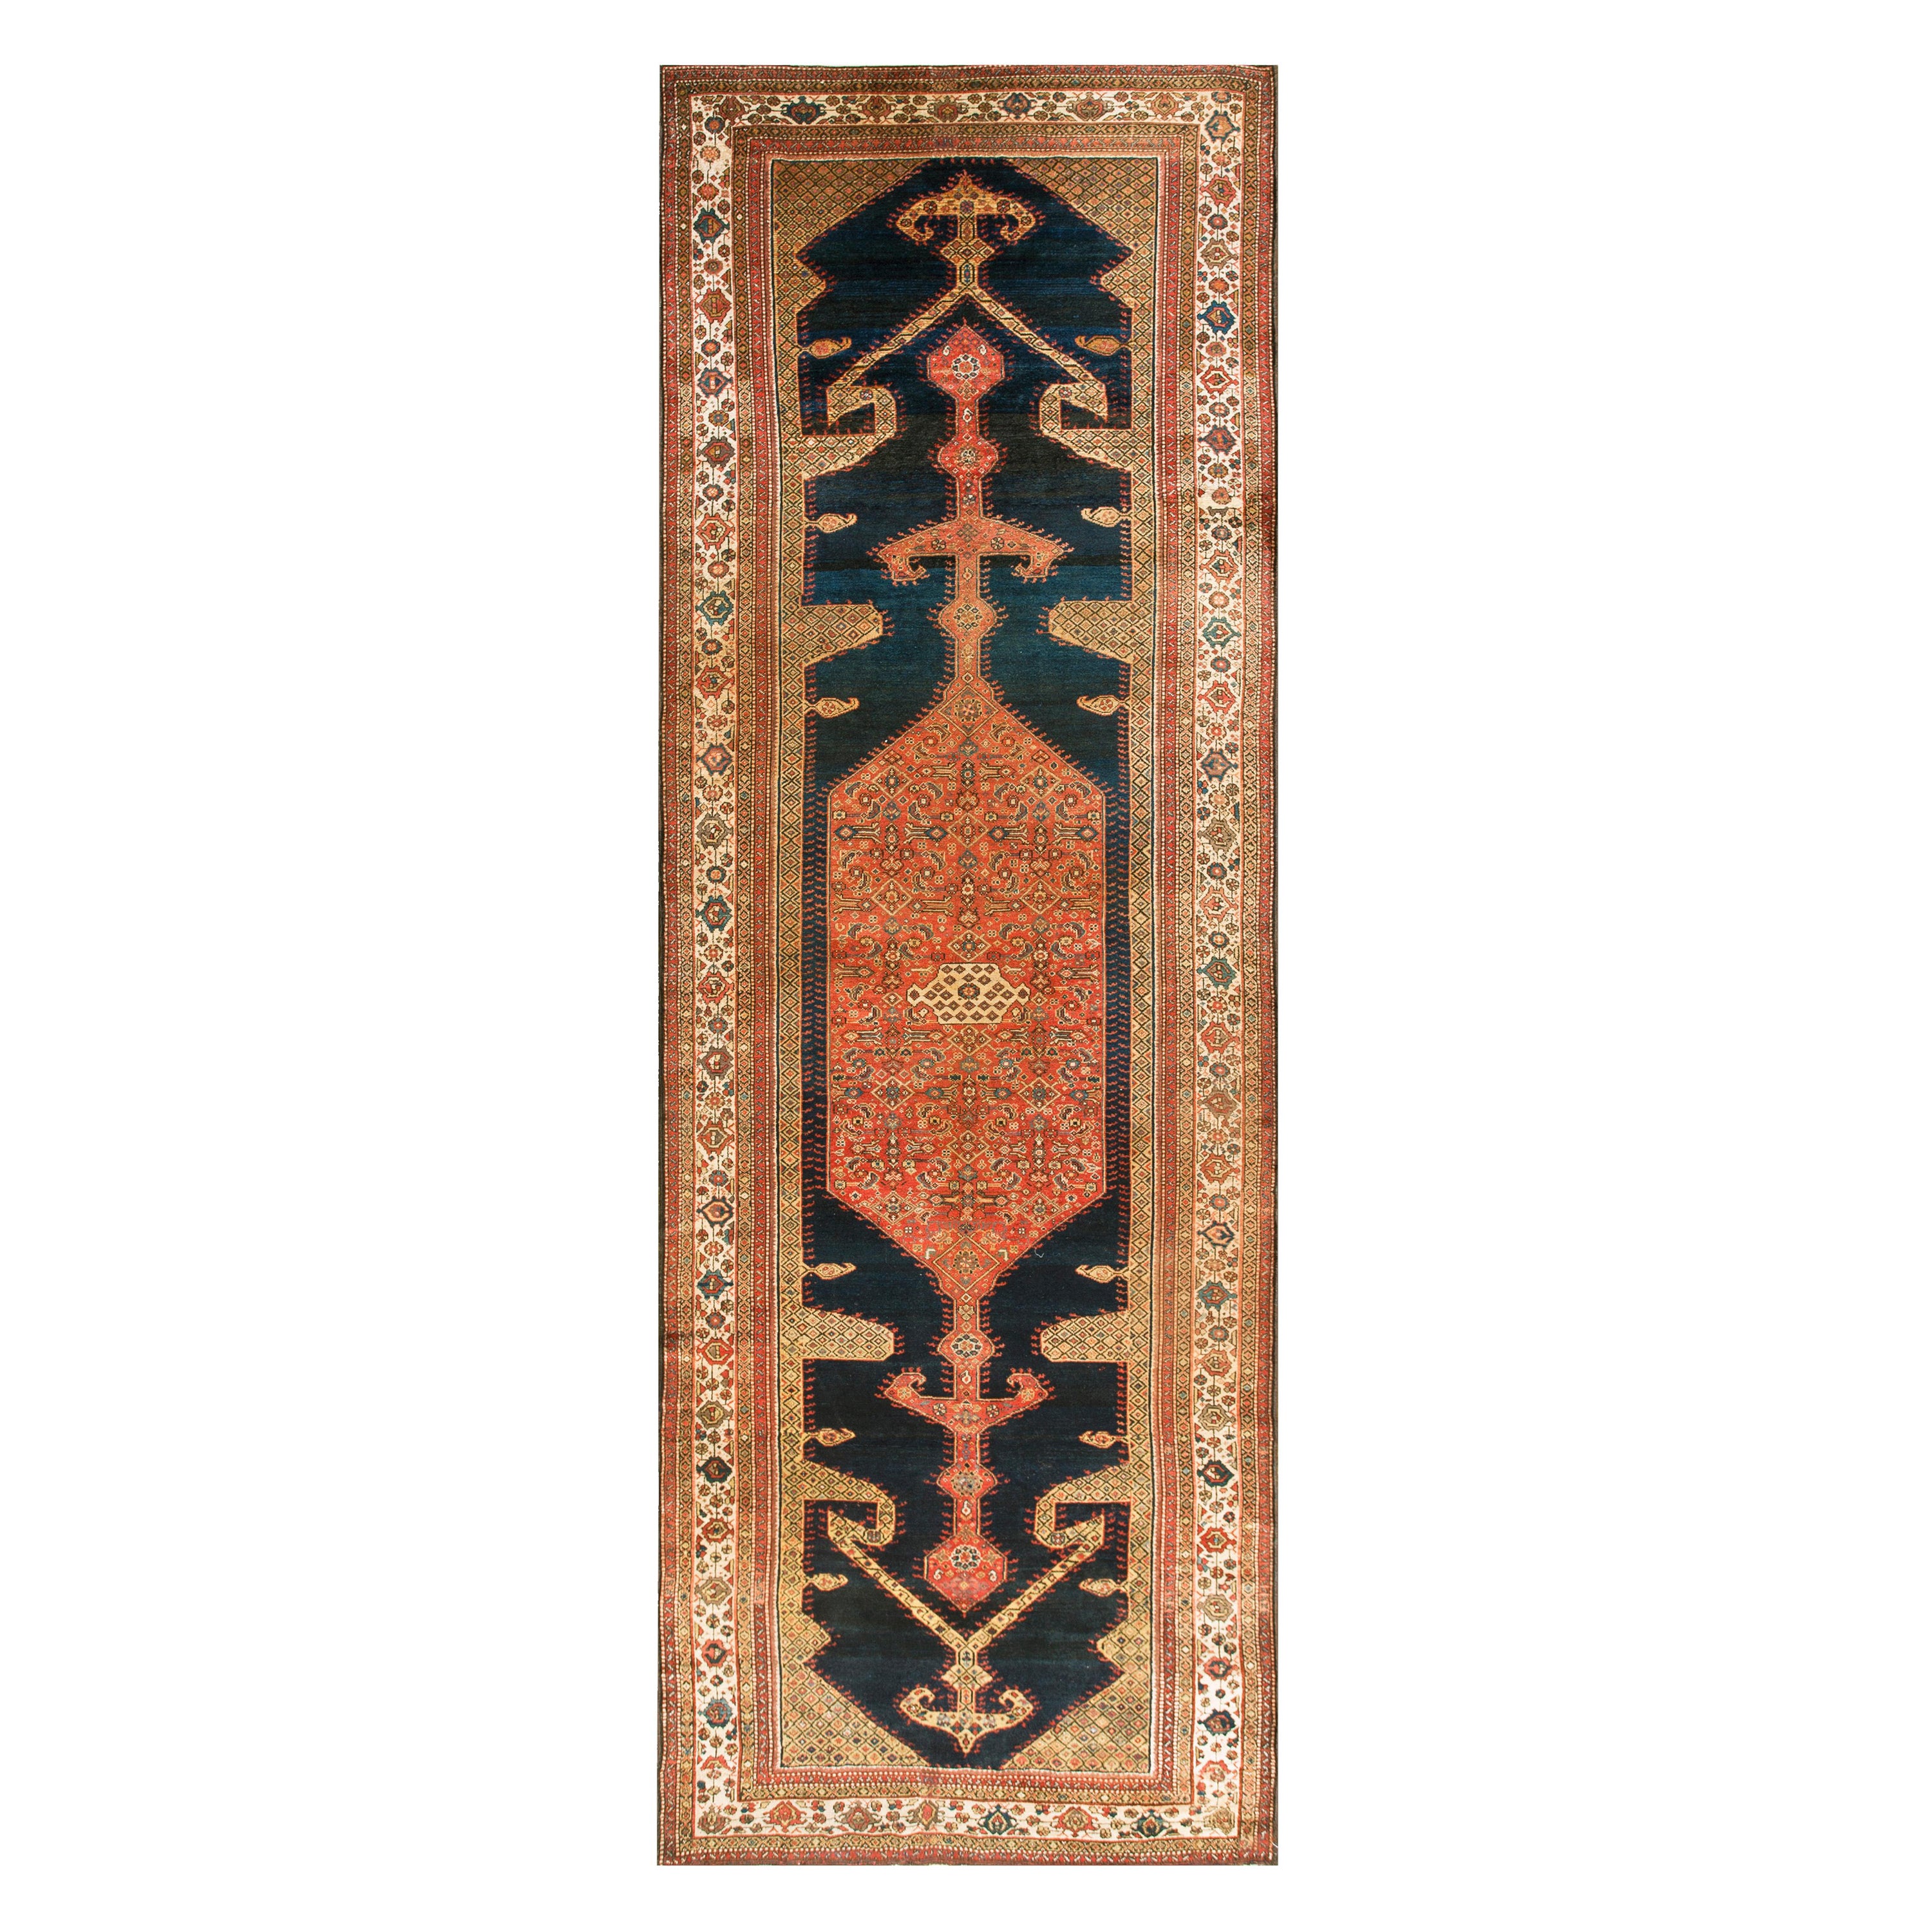 Late 19th Century Persian Malayer Carpet ( 5' 8" x 16' - 172 x 487 cm )